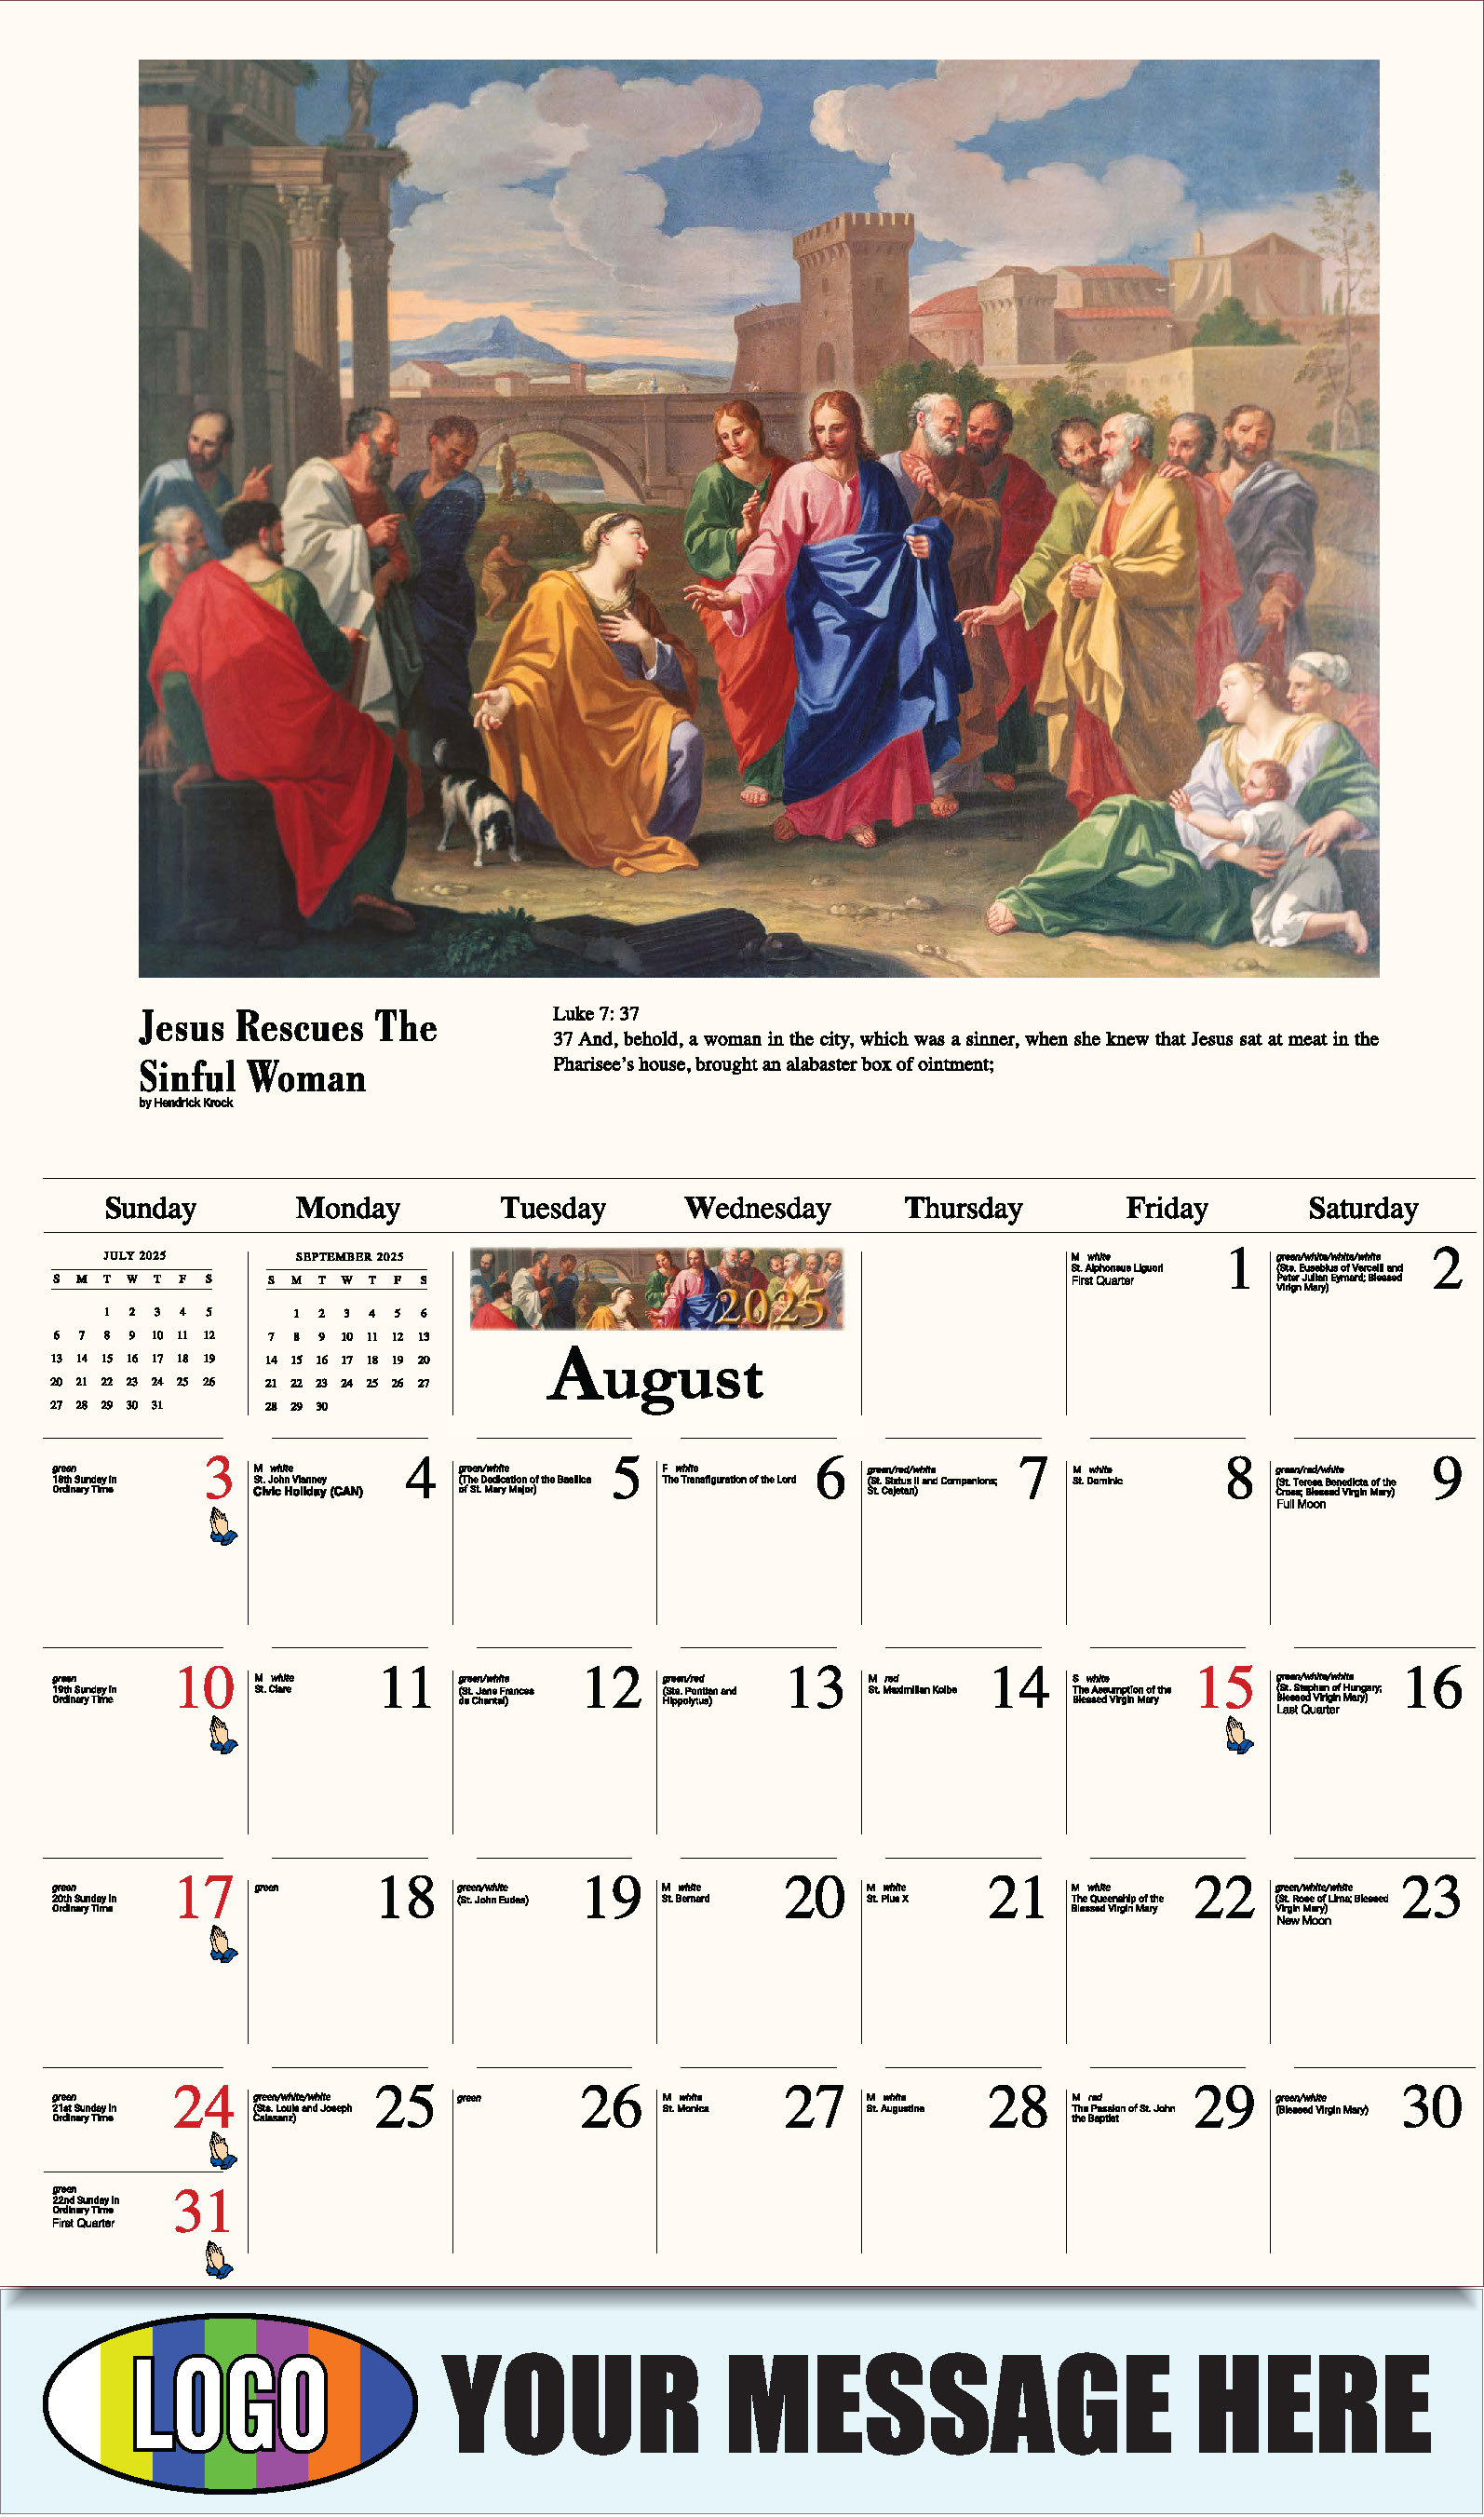 Catholic Inspirations 2025 Church Promotion Calendar - August